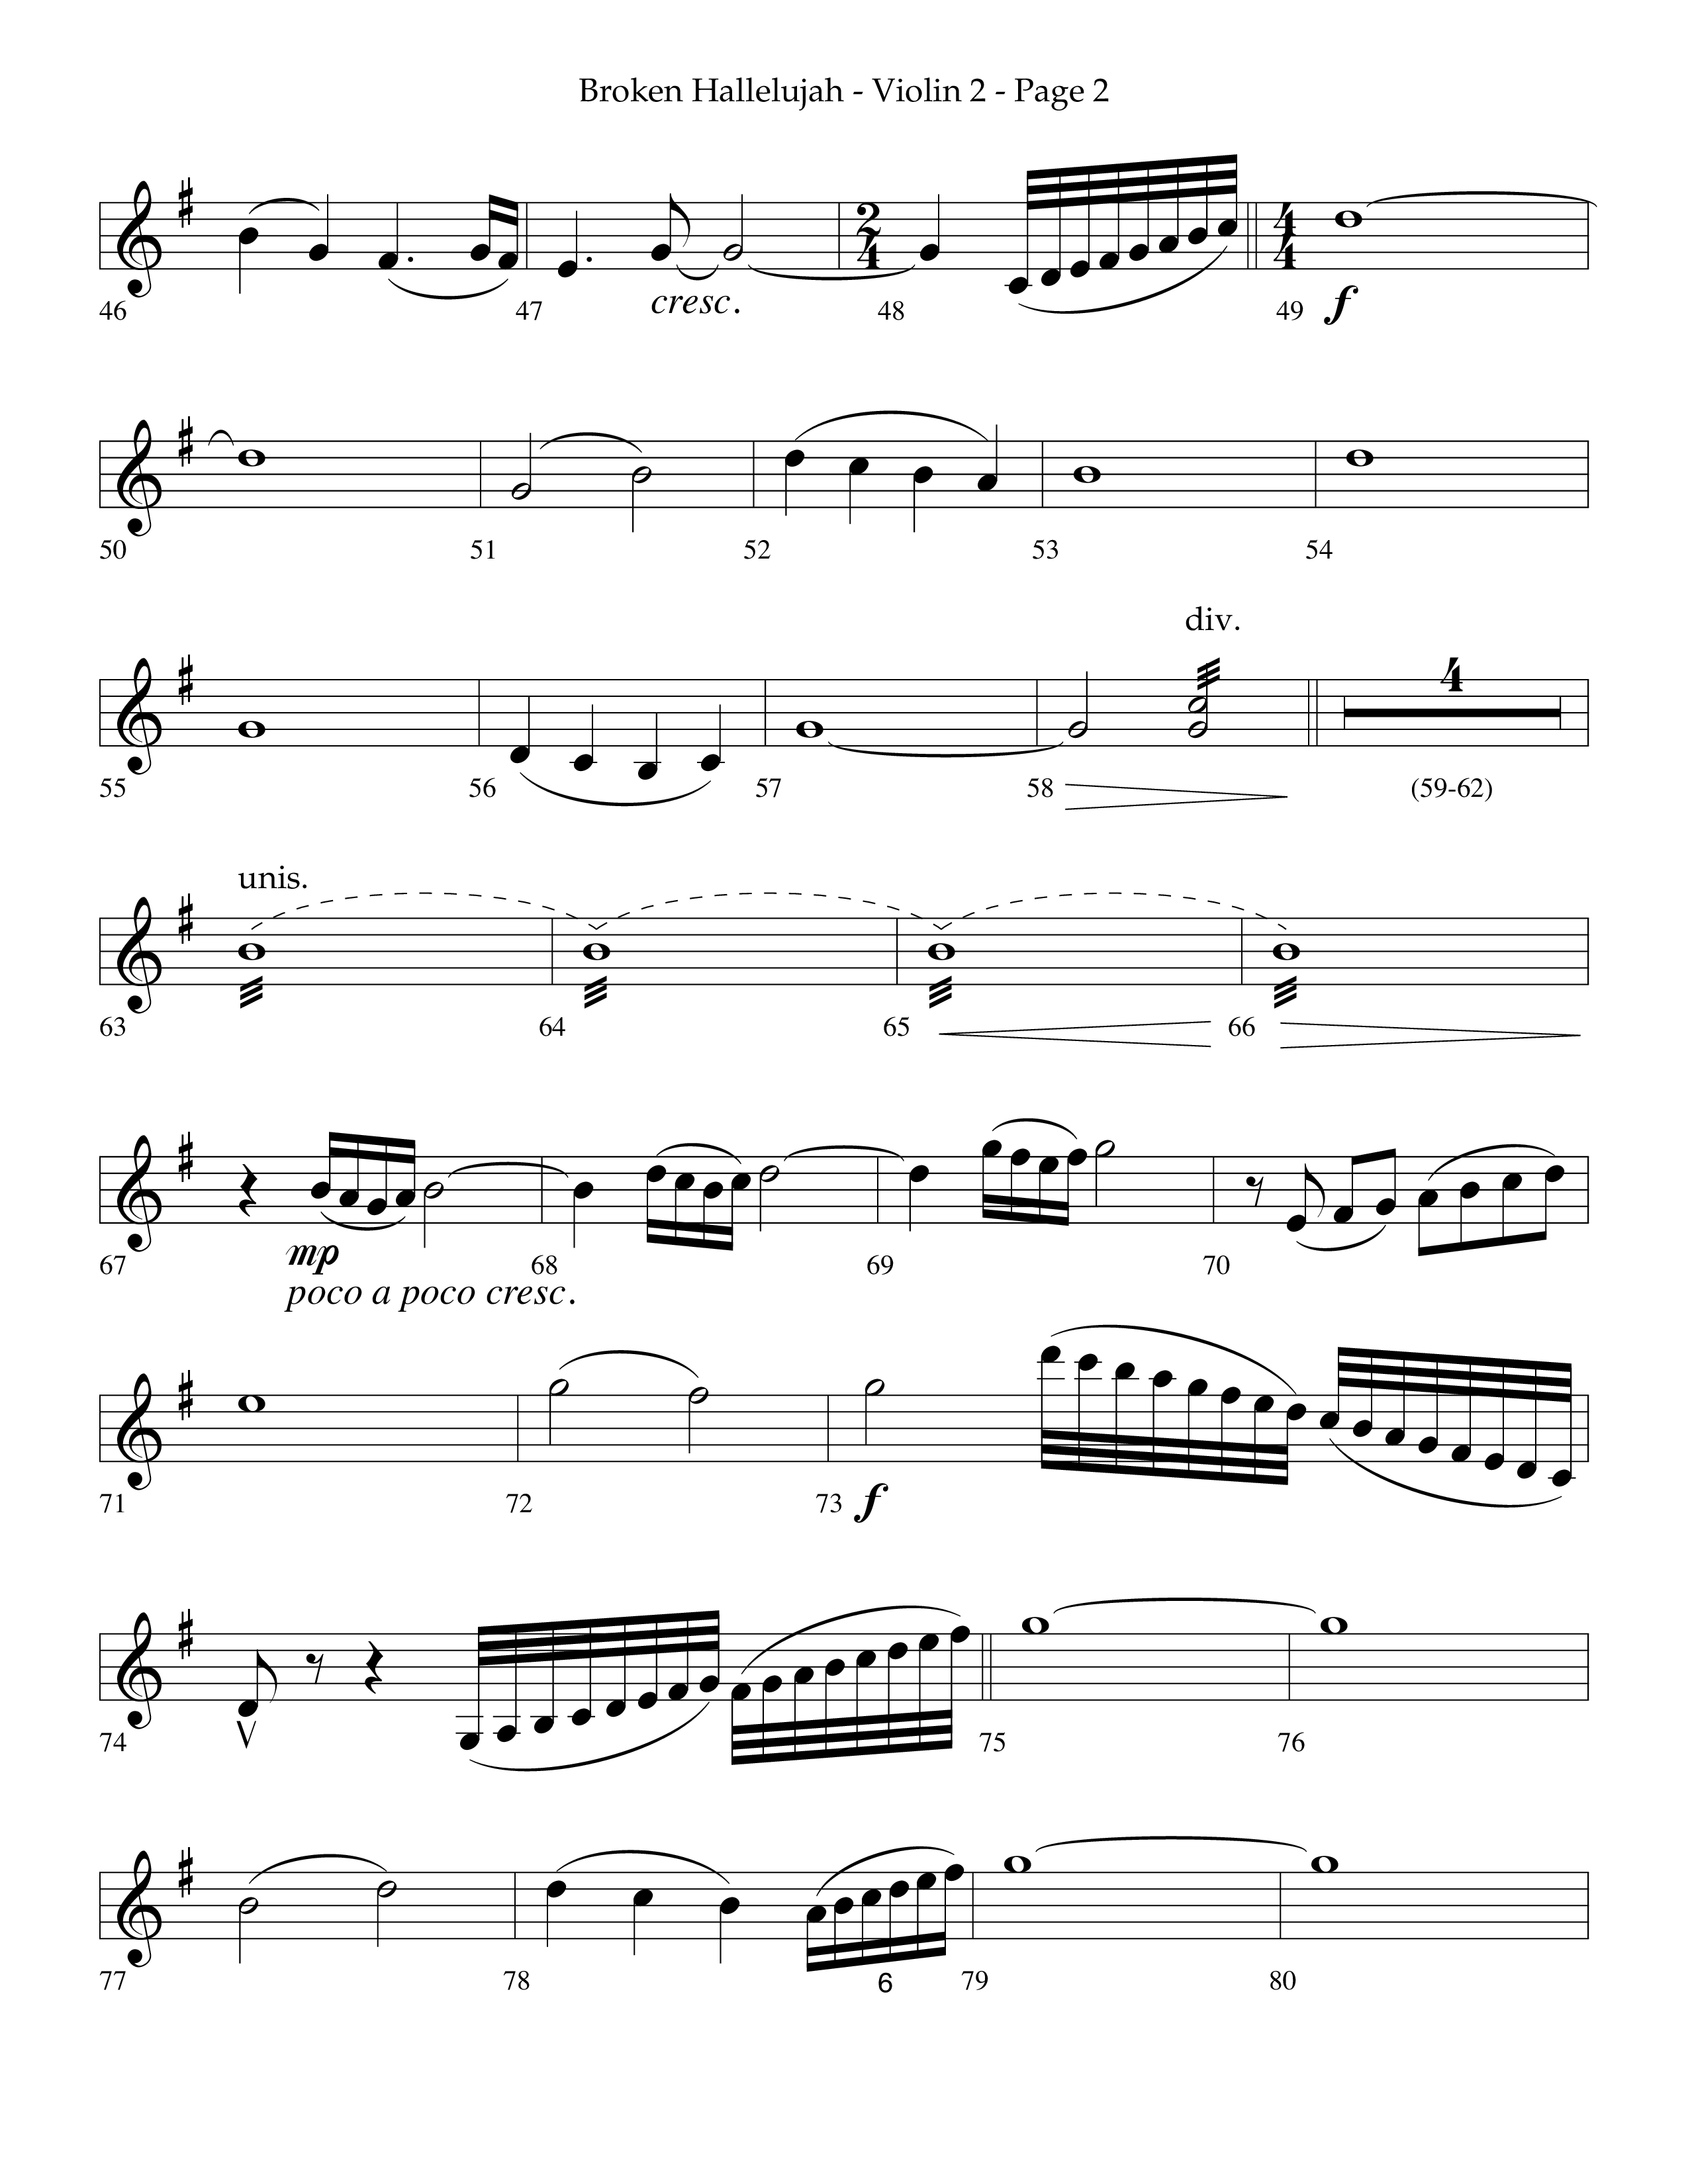 Broken Hallelujah (Choral Anthem SATB) Violin 2 (Lifeway Choral / Arr. Phillip Keveren)